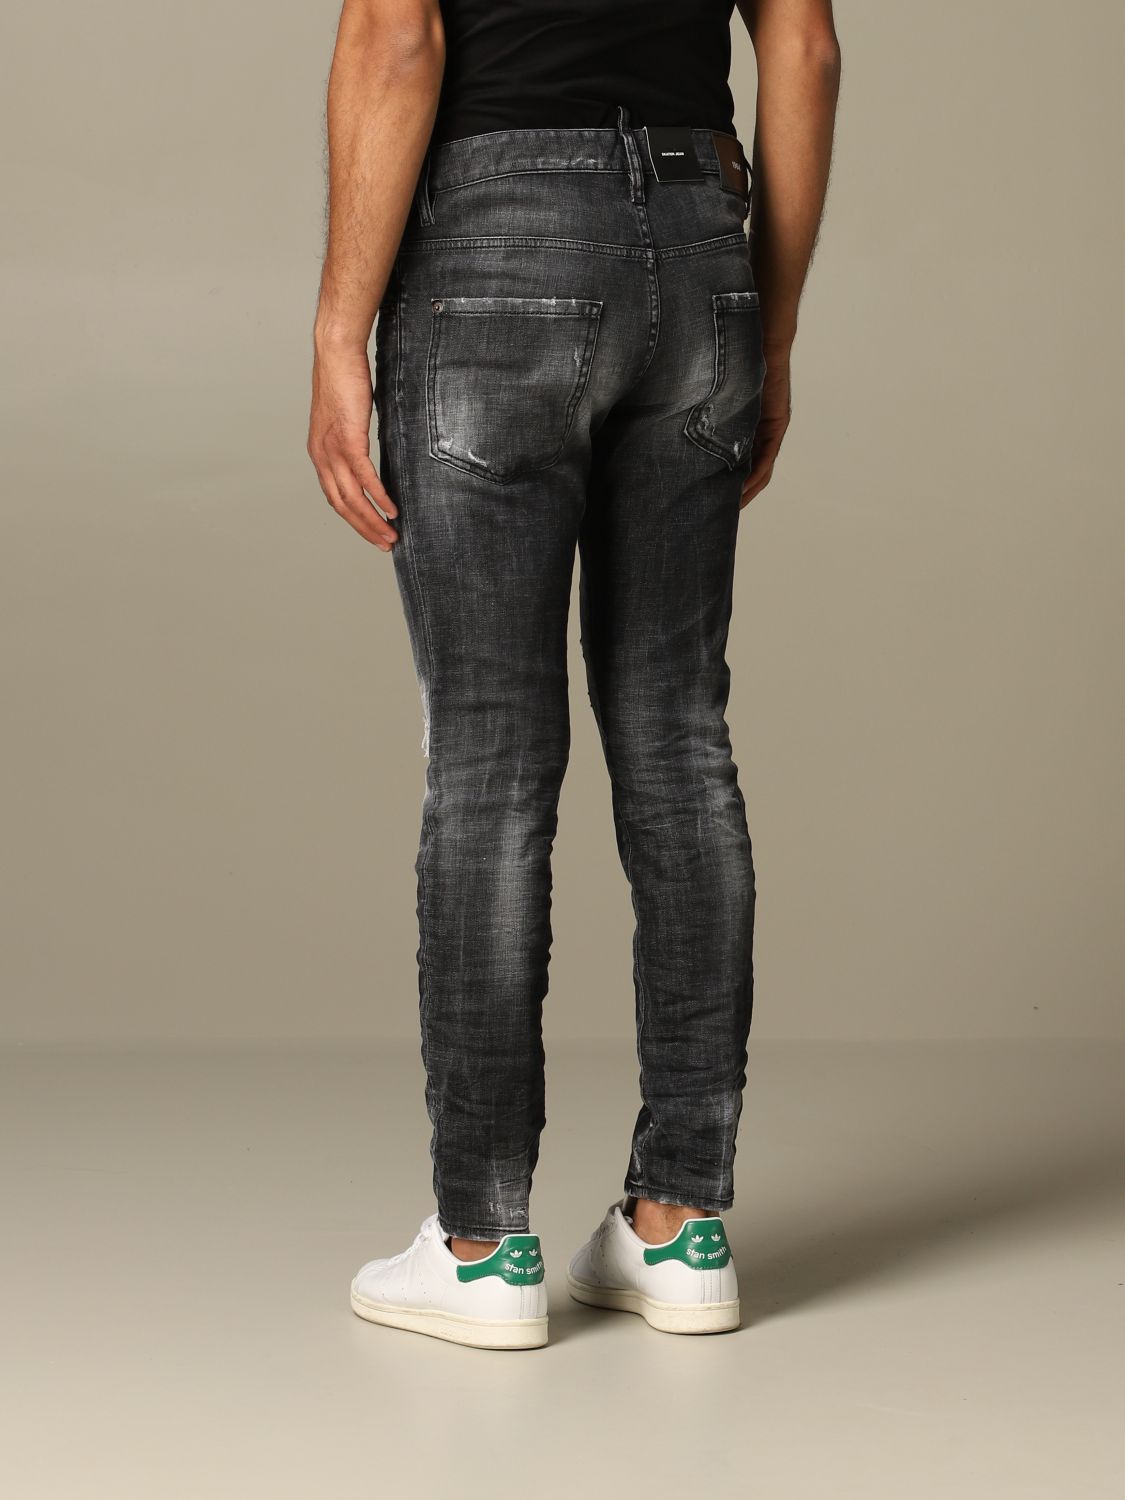 Dsquared2 Outlet: slim fit Skater jeans with breaks - Black | Jeans Dsquared2 S74LB0783 S30357